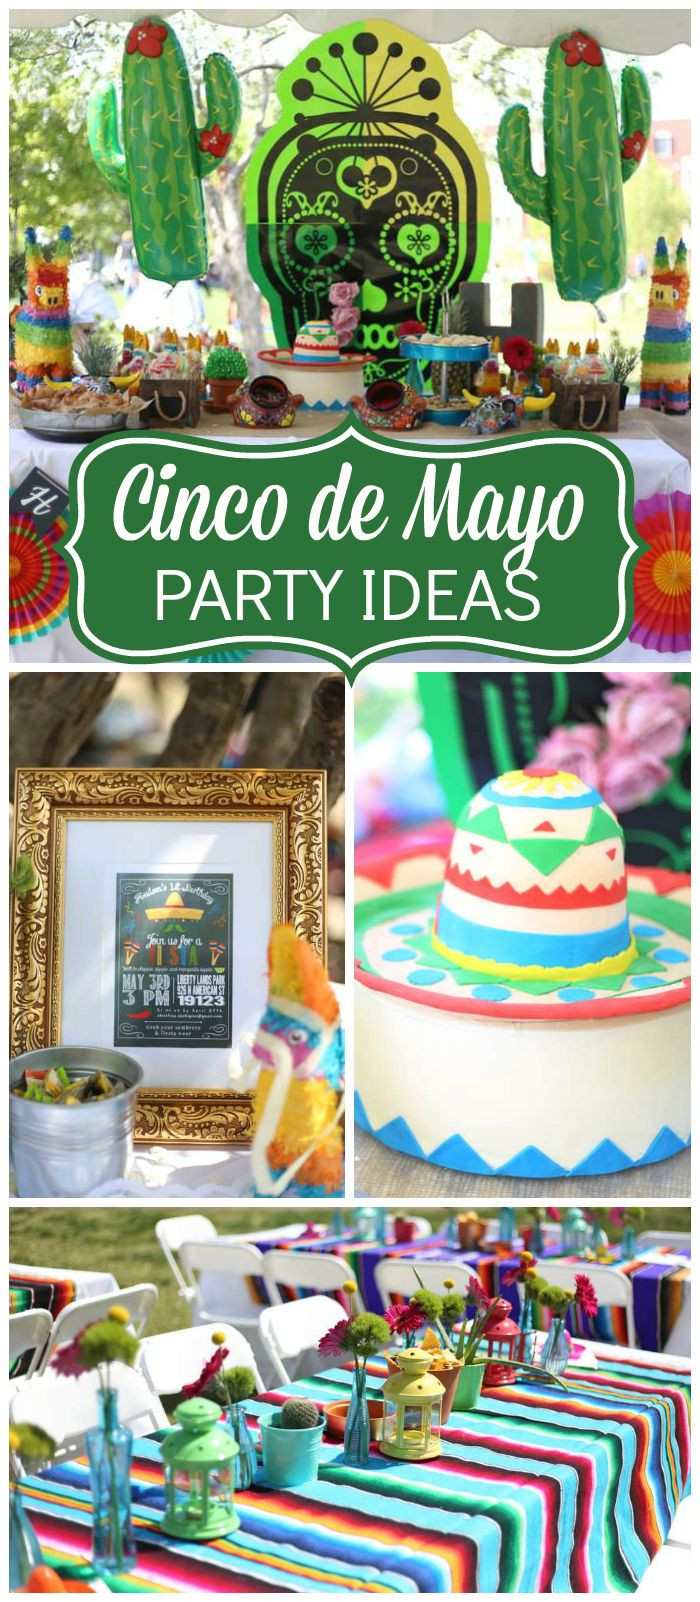 Cinco De Mayo Birthday Party Ideas
 Check out this Cinco de Mayo party with a taco bar and